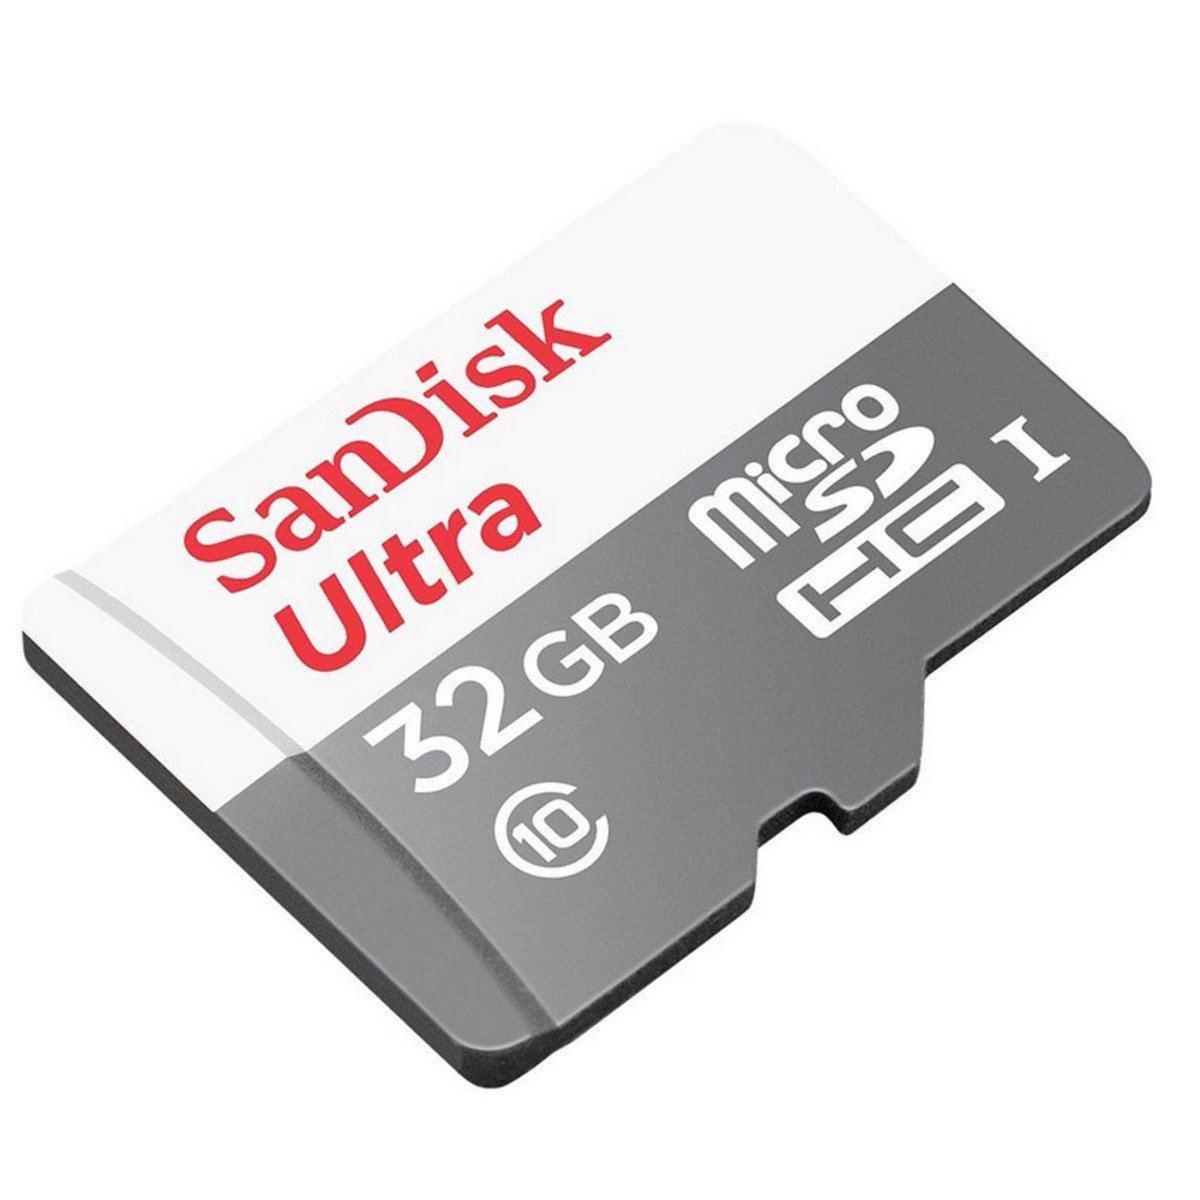 Sandisk Ultra Micro SD Card SDSQUNB 32GB